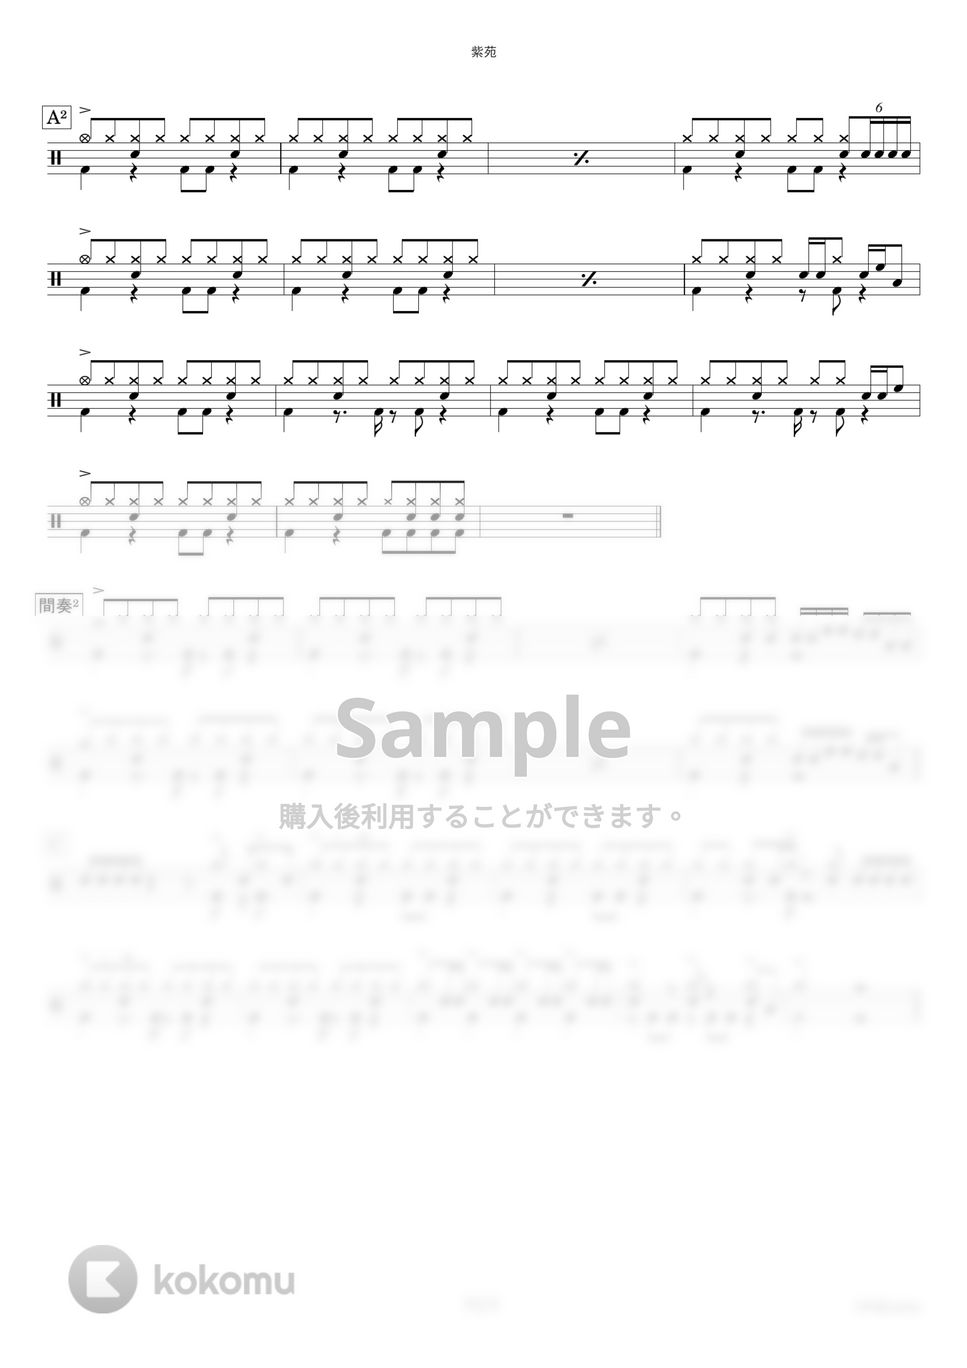 Saucy Dog - 紫苑【ドラム楽譜・初心者向け】 by HYdrums